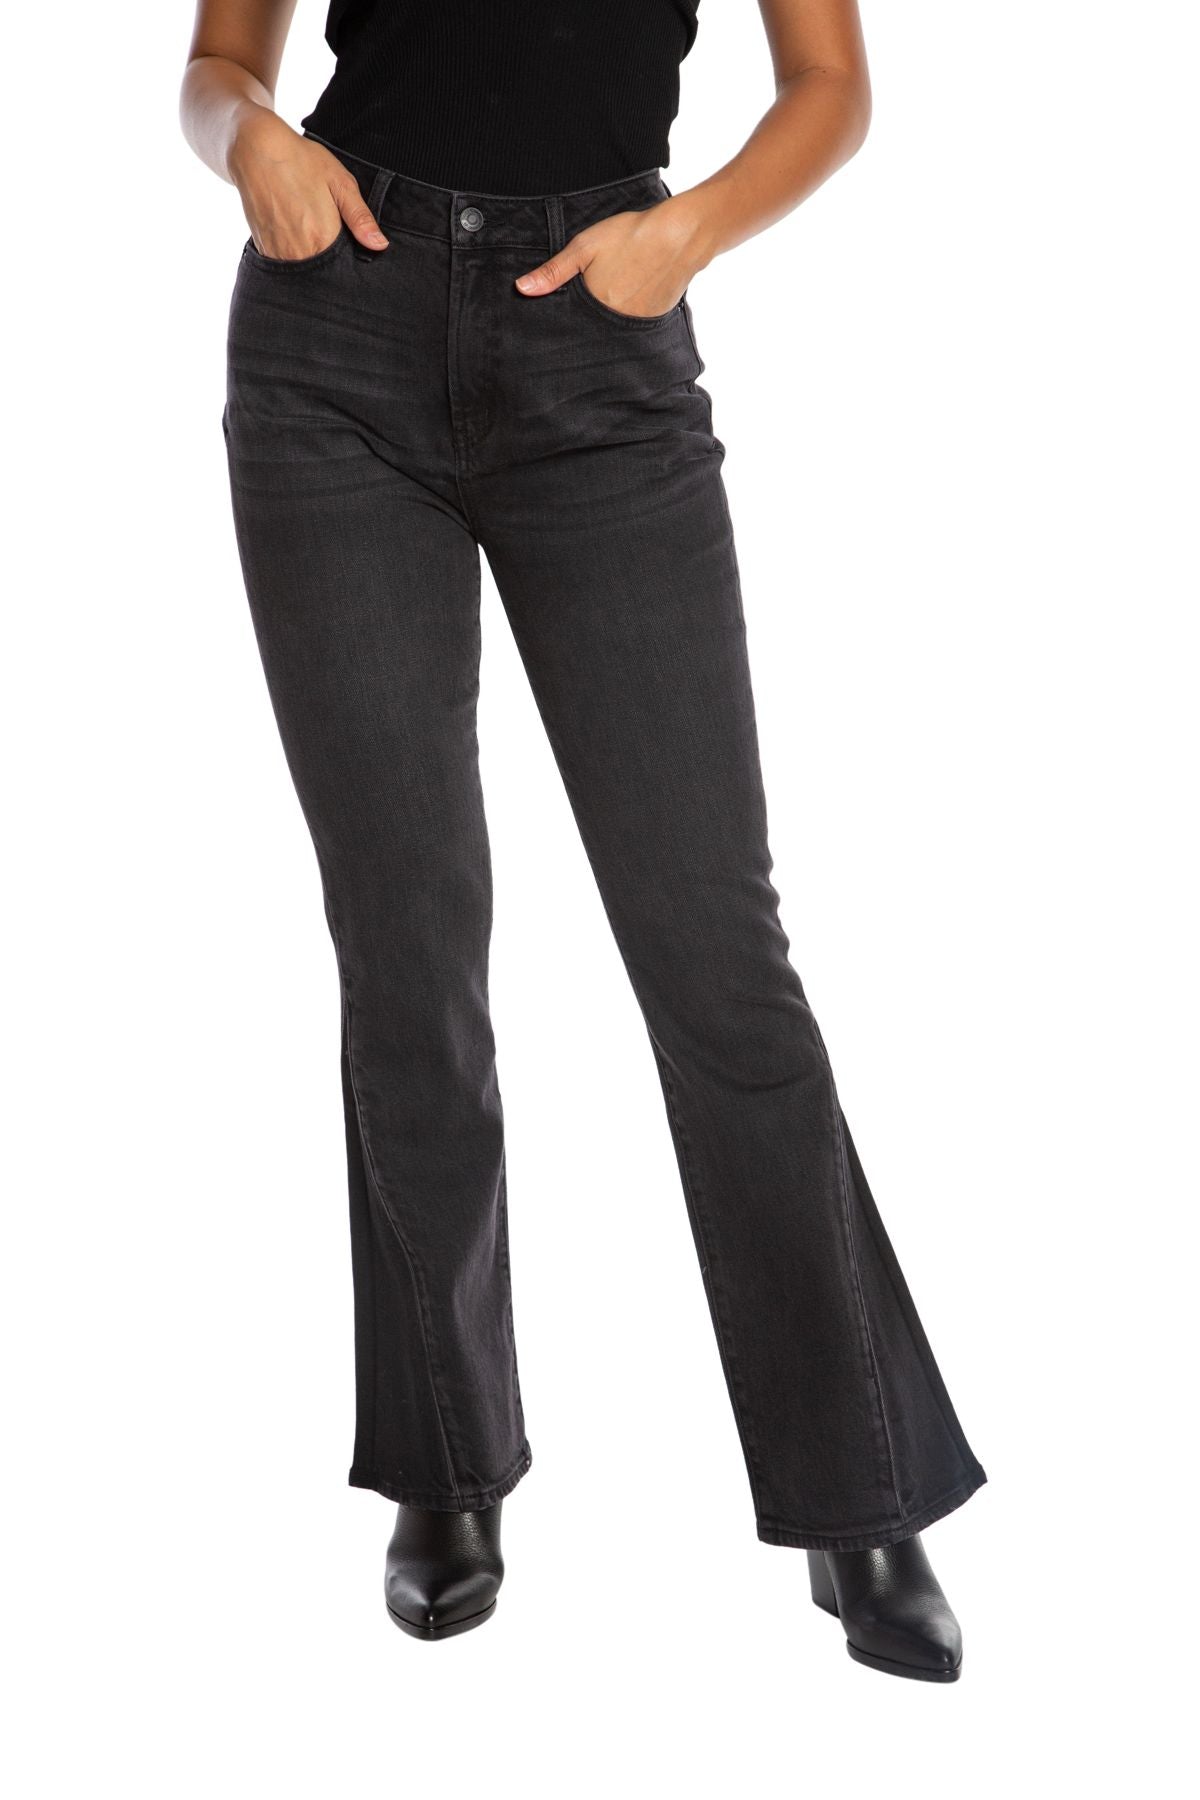 Juicy Couture Malibu Flare Jeans Black